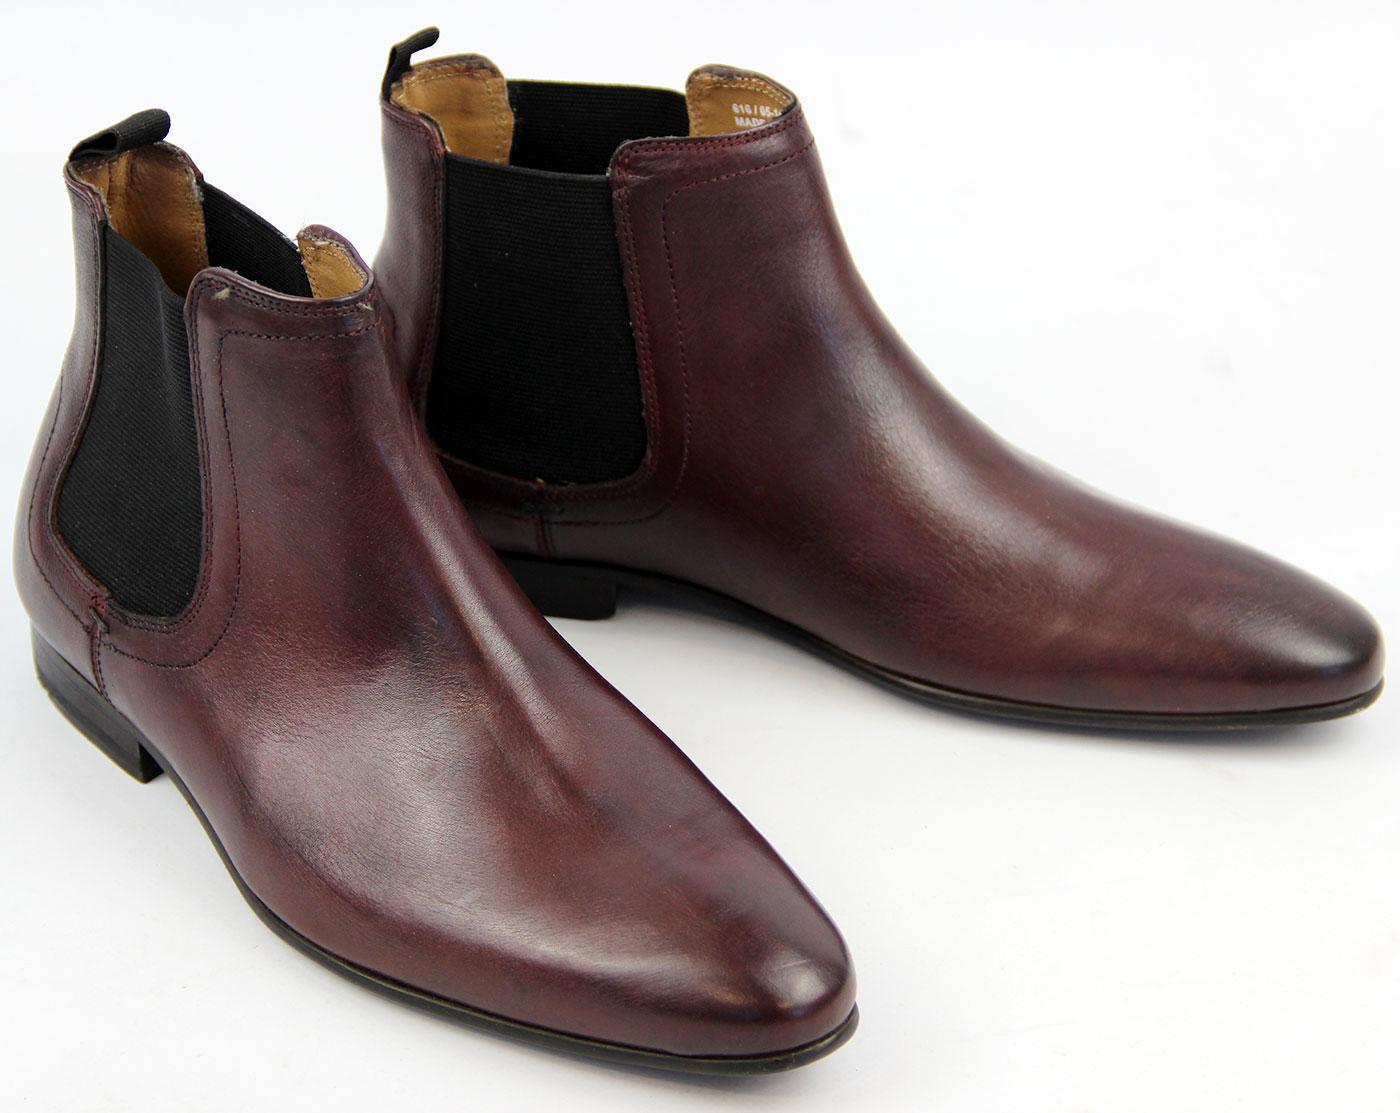 BEN SHERMAN Enox Retro 60s Mod Leather Chelsea Boots in Burgundy